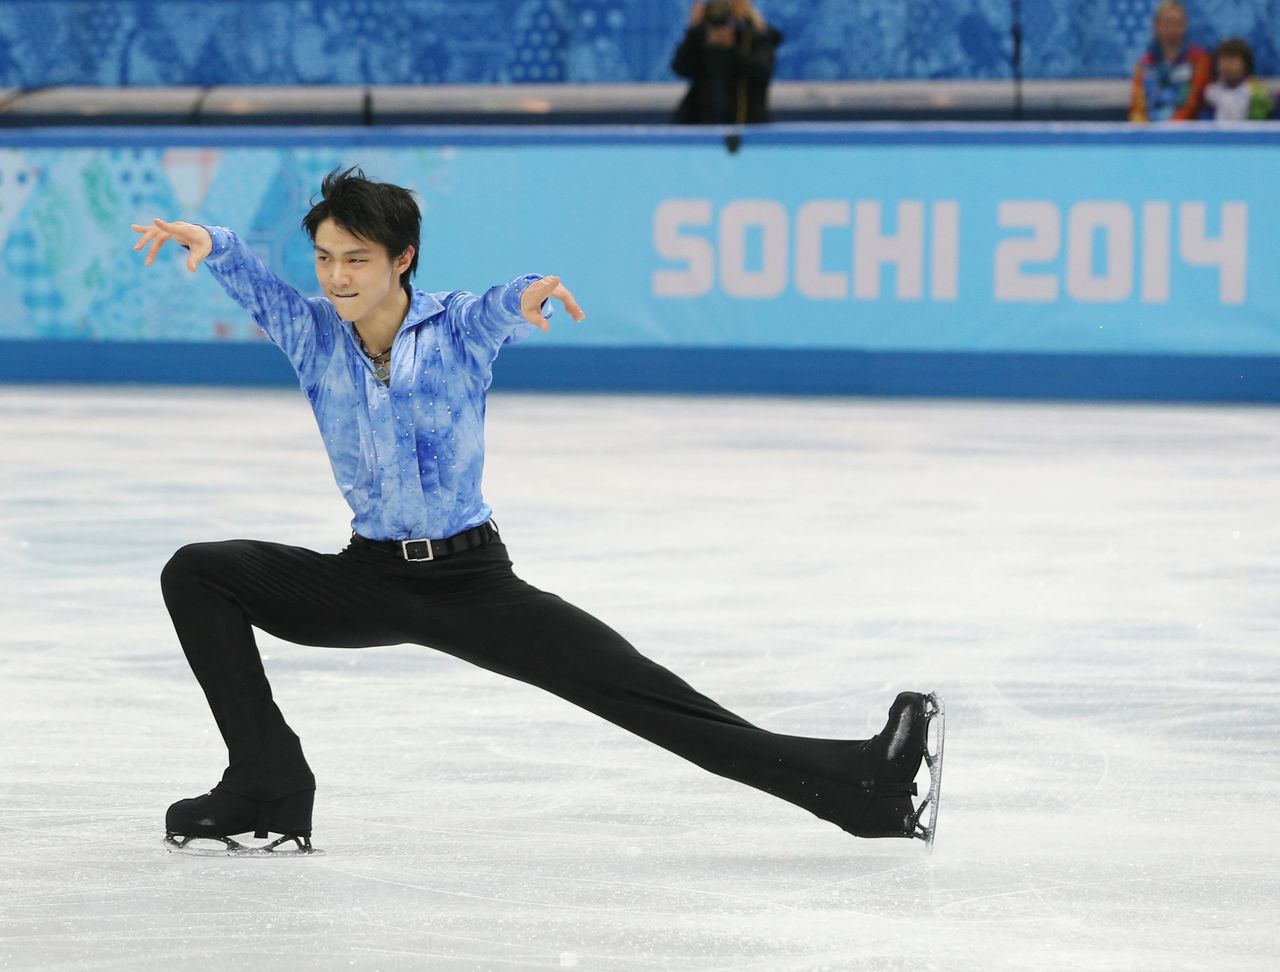 Hanyū Yuzuru performs in the short program at the Sochi Winter Olympics in 2014. (© Jiji)